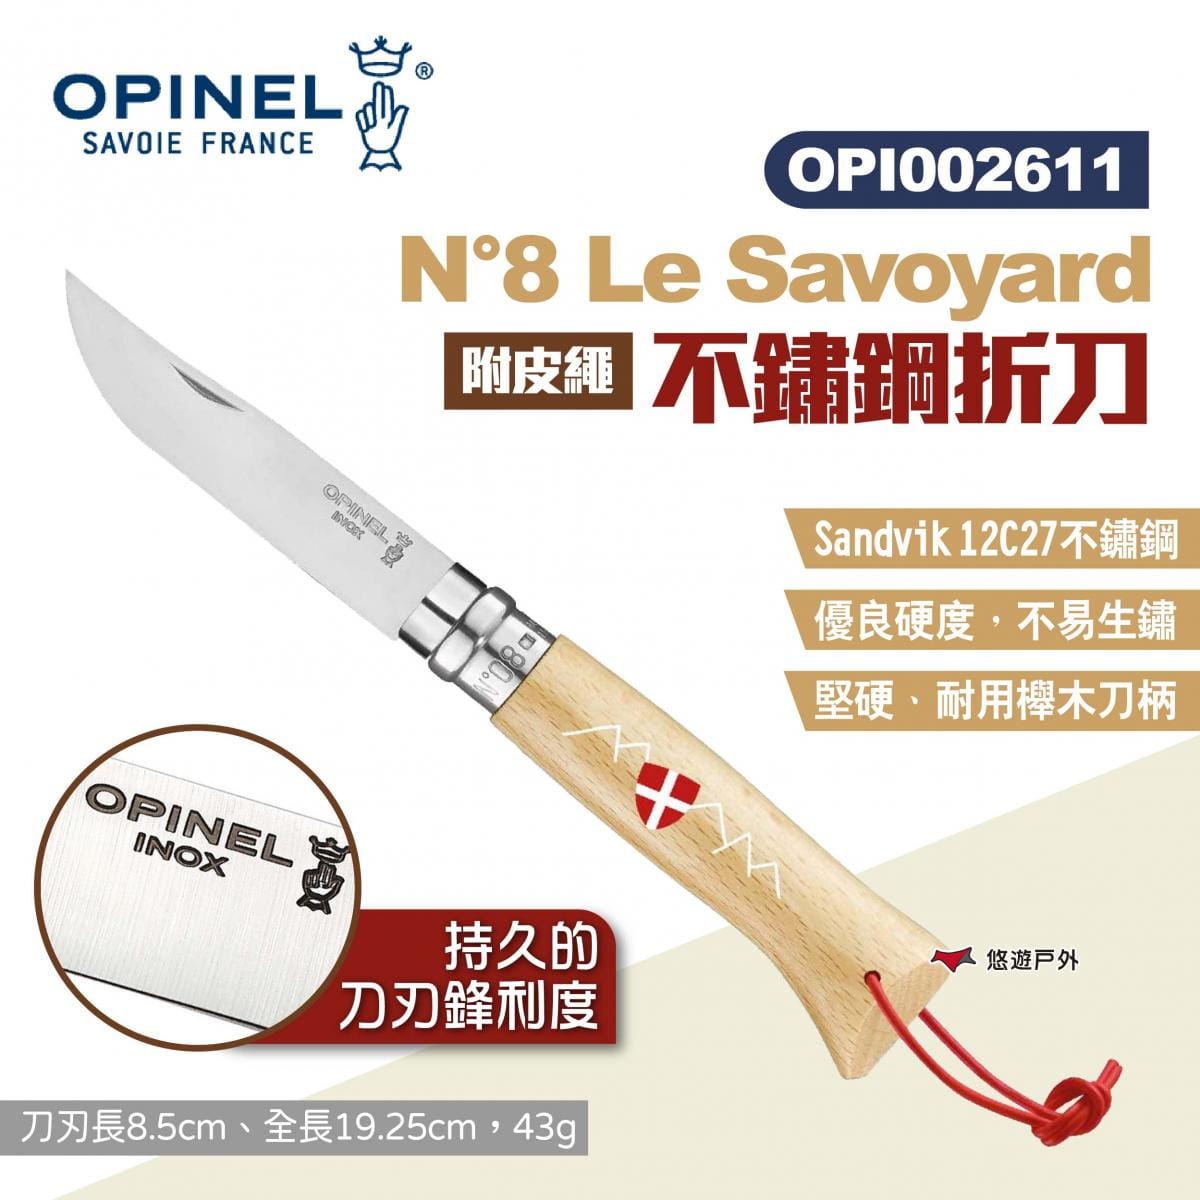 【OPINEL】N°8 Le Savoyard不鏽鋼折刀 002611 悠遊戶外 1